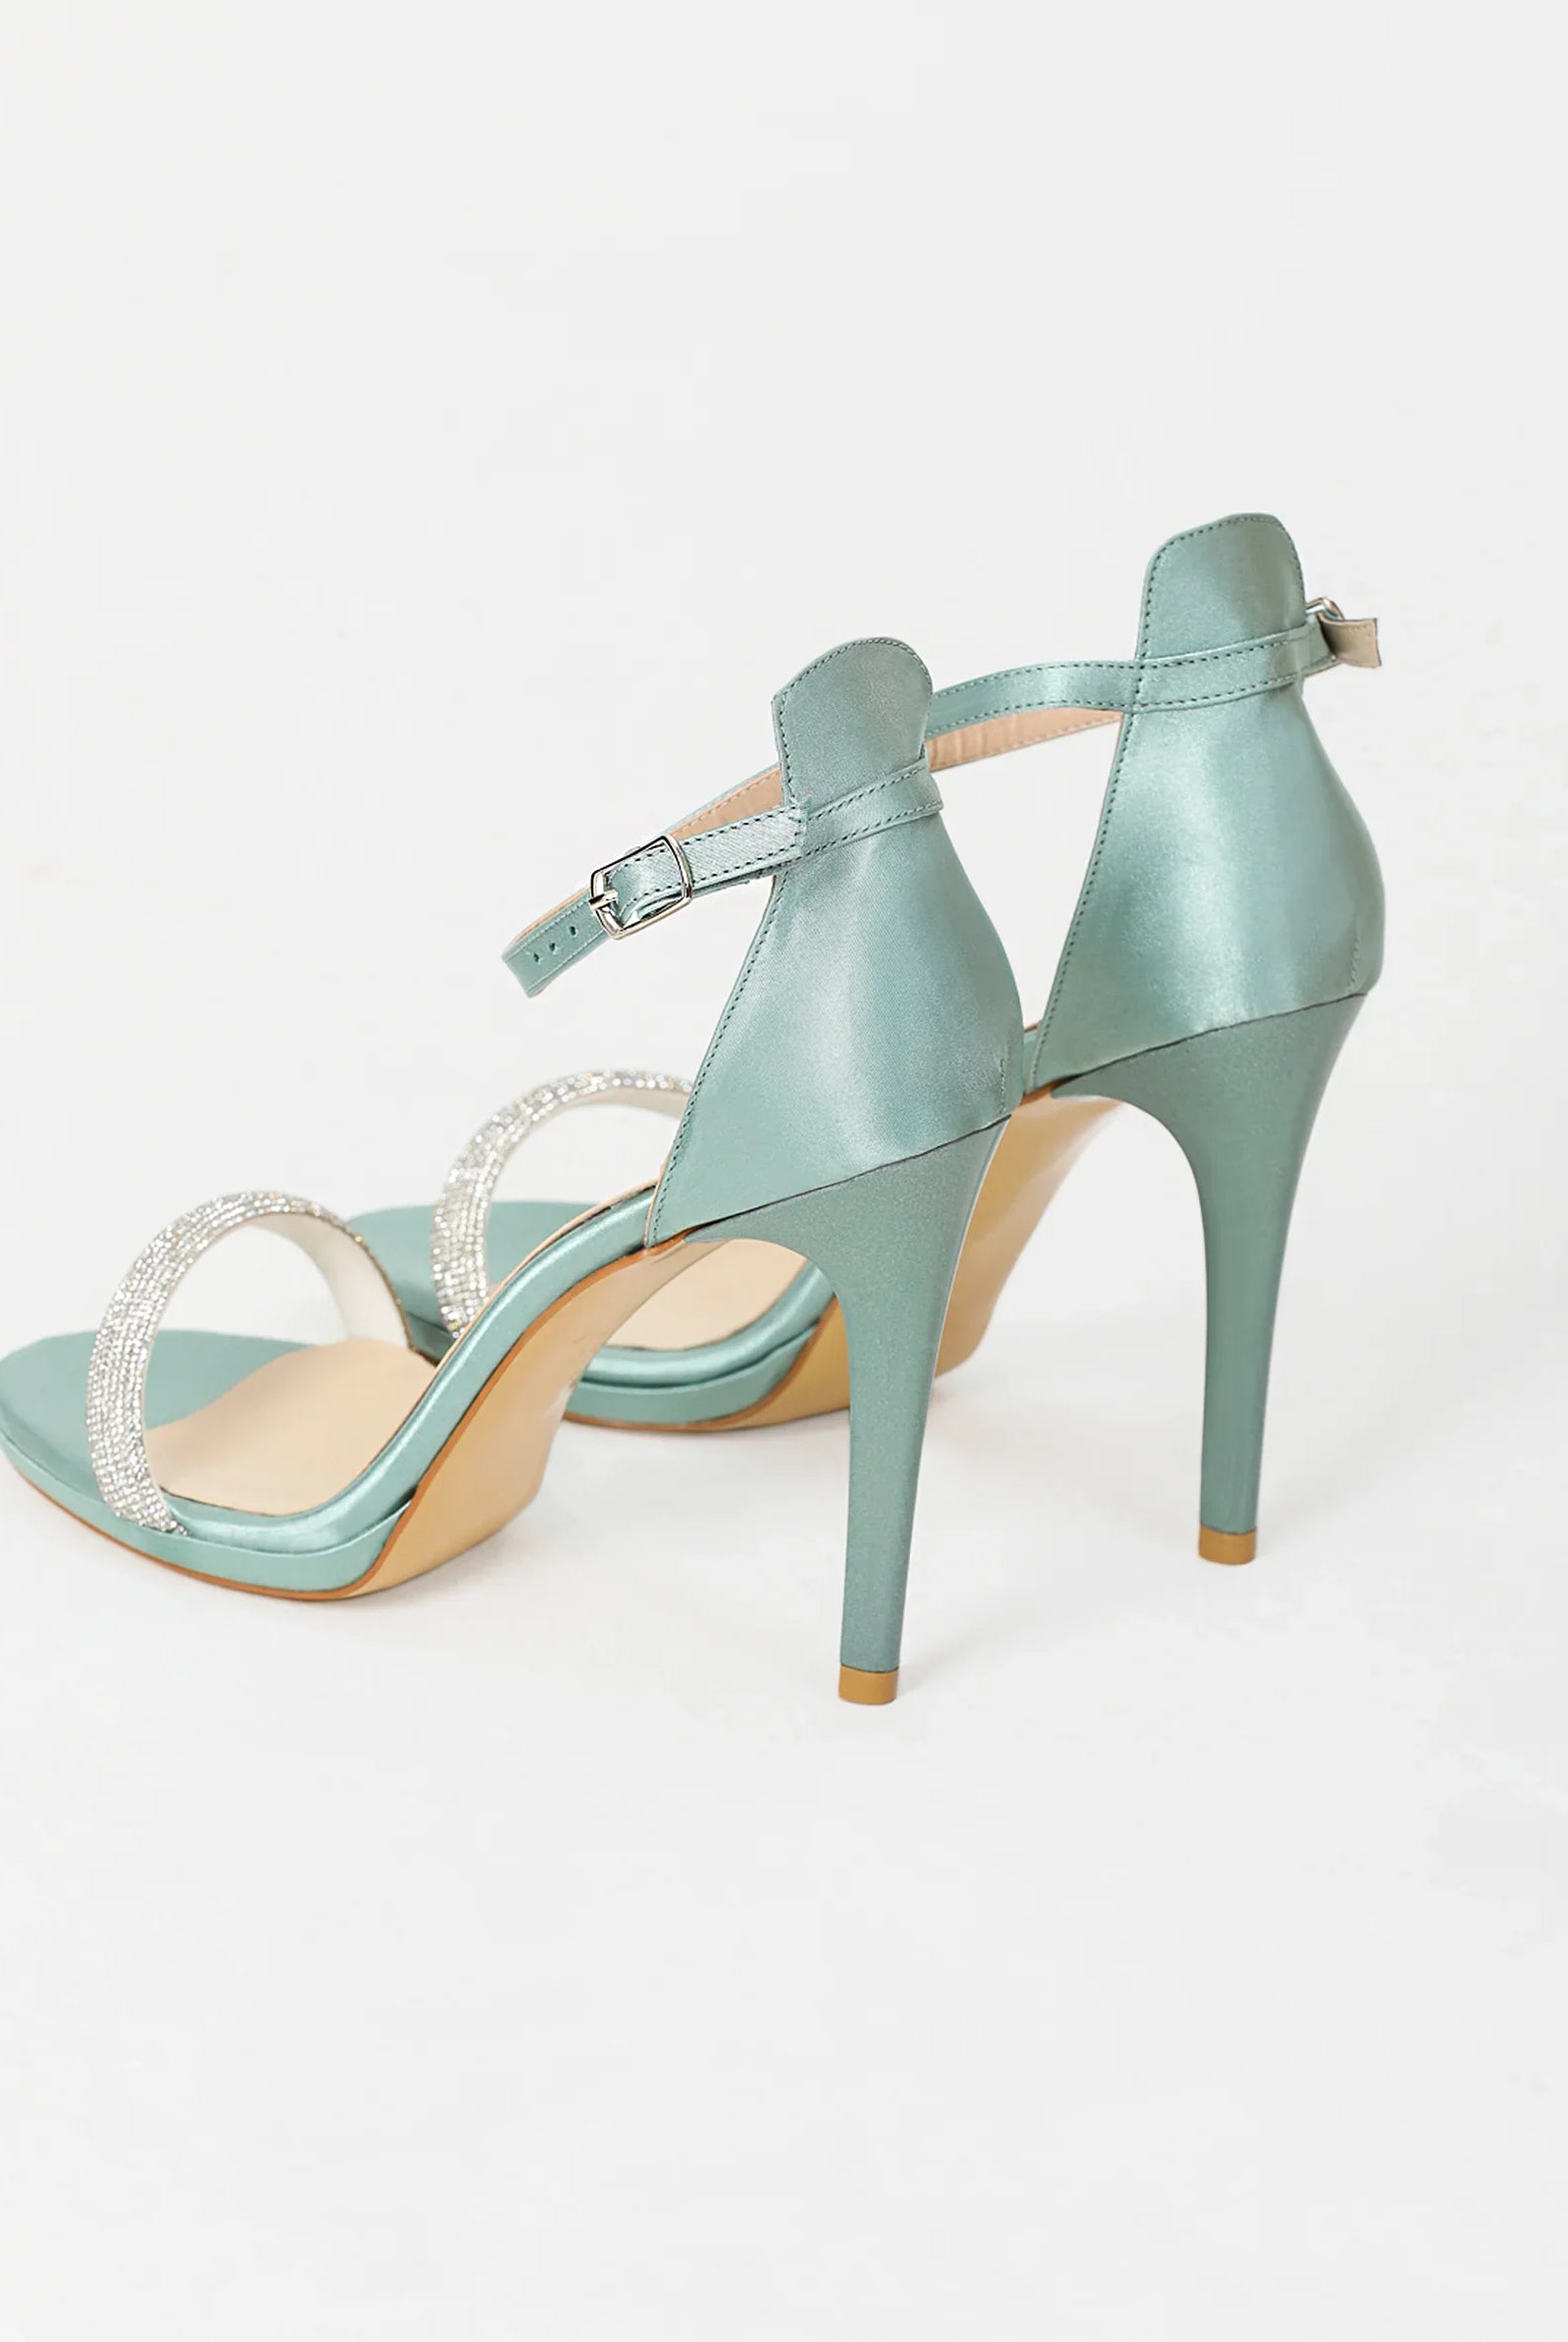 mint green heels uk